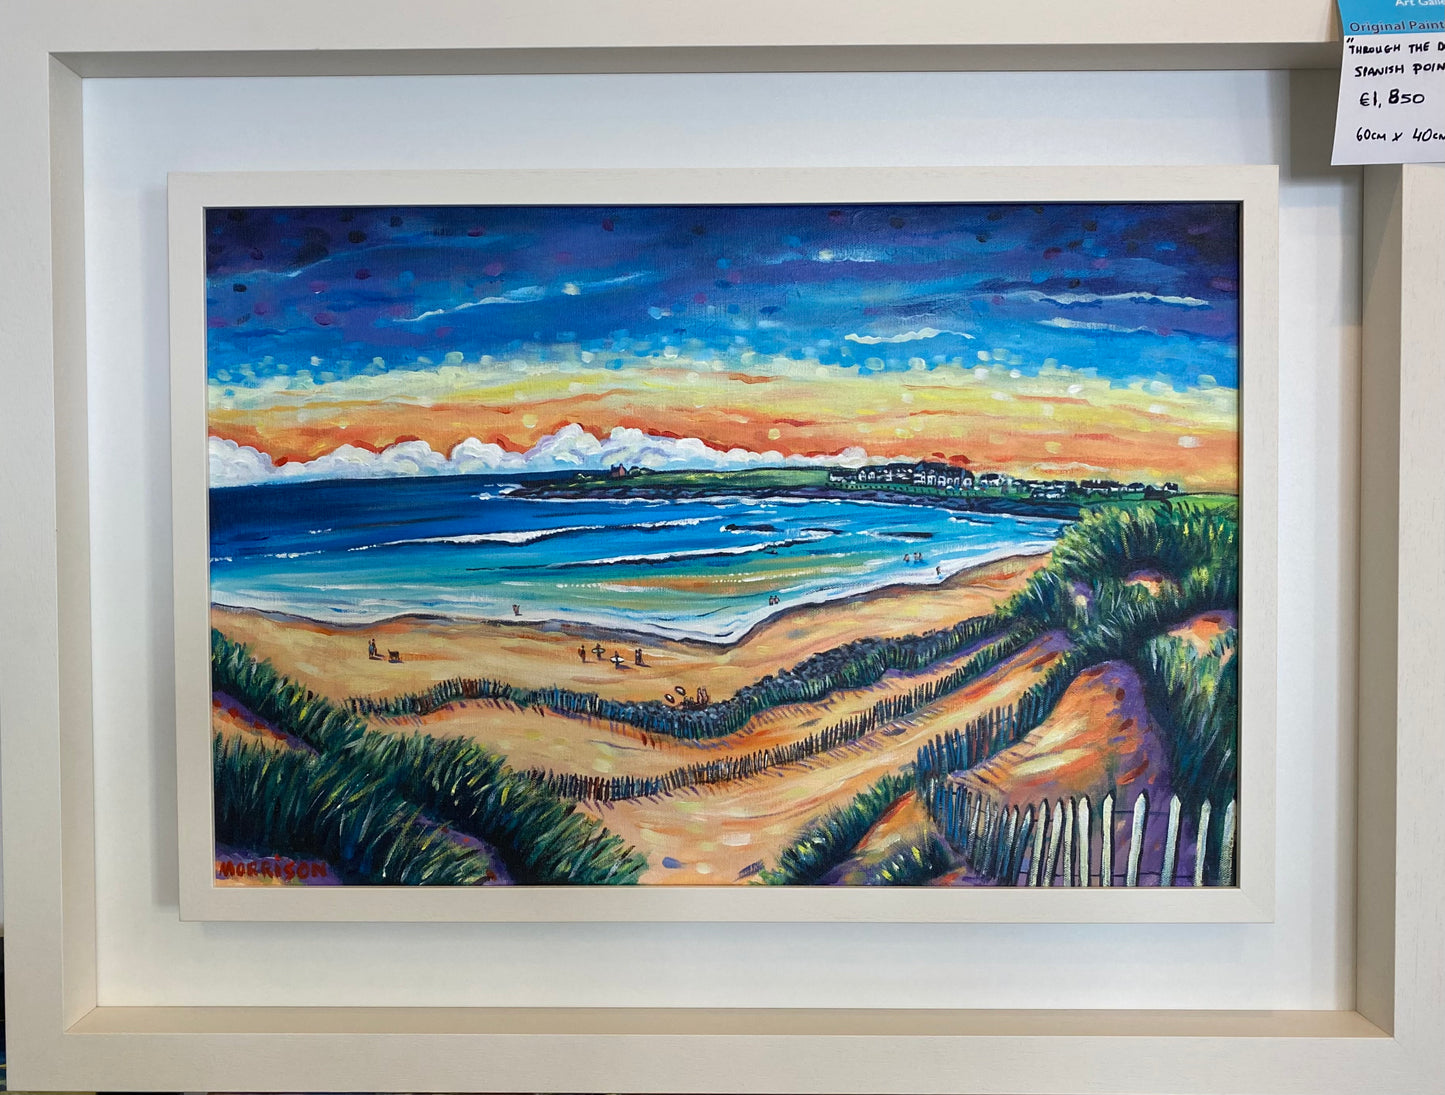 Spanish Point, Through the dunes Original painting in cream double box frame 83x63cm